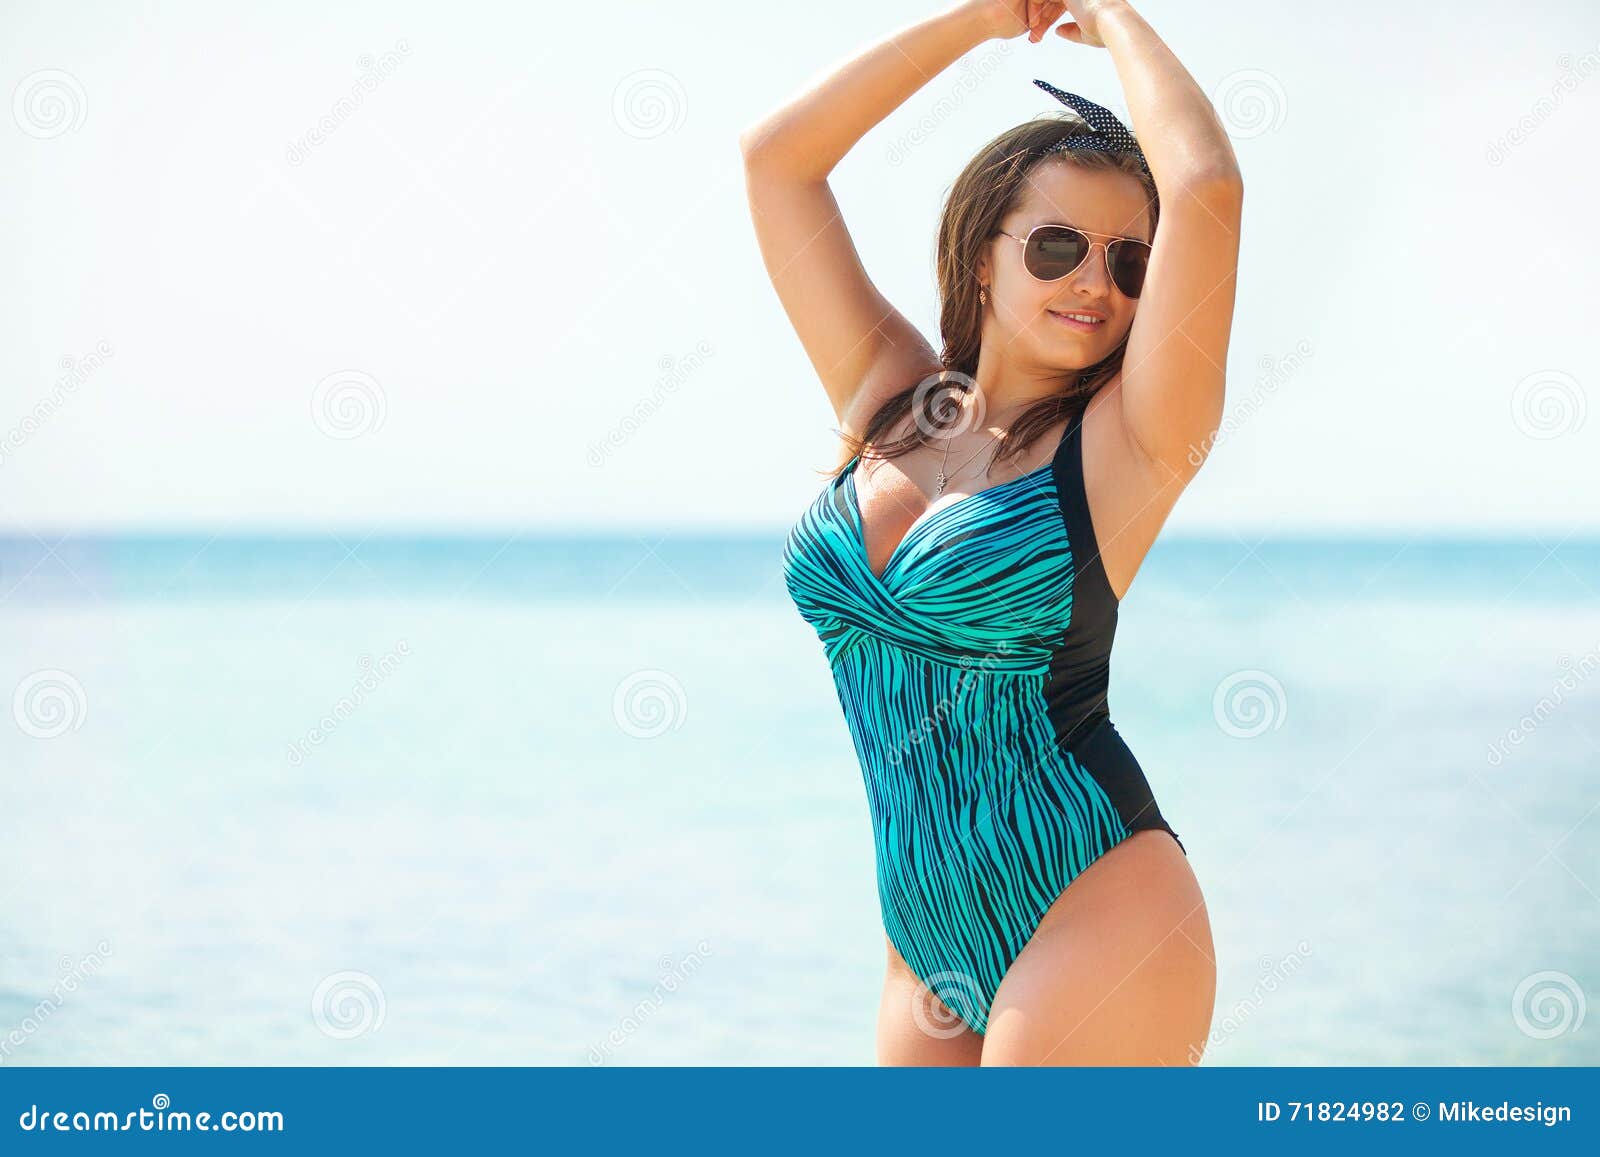 1,930 Fat Woman Swimsuit Stock Photos